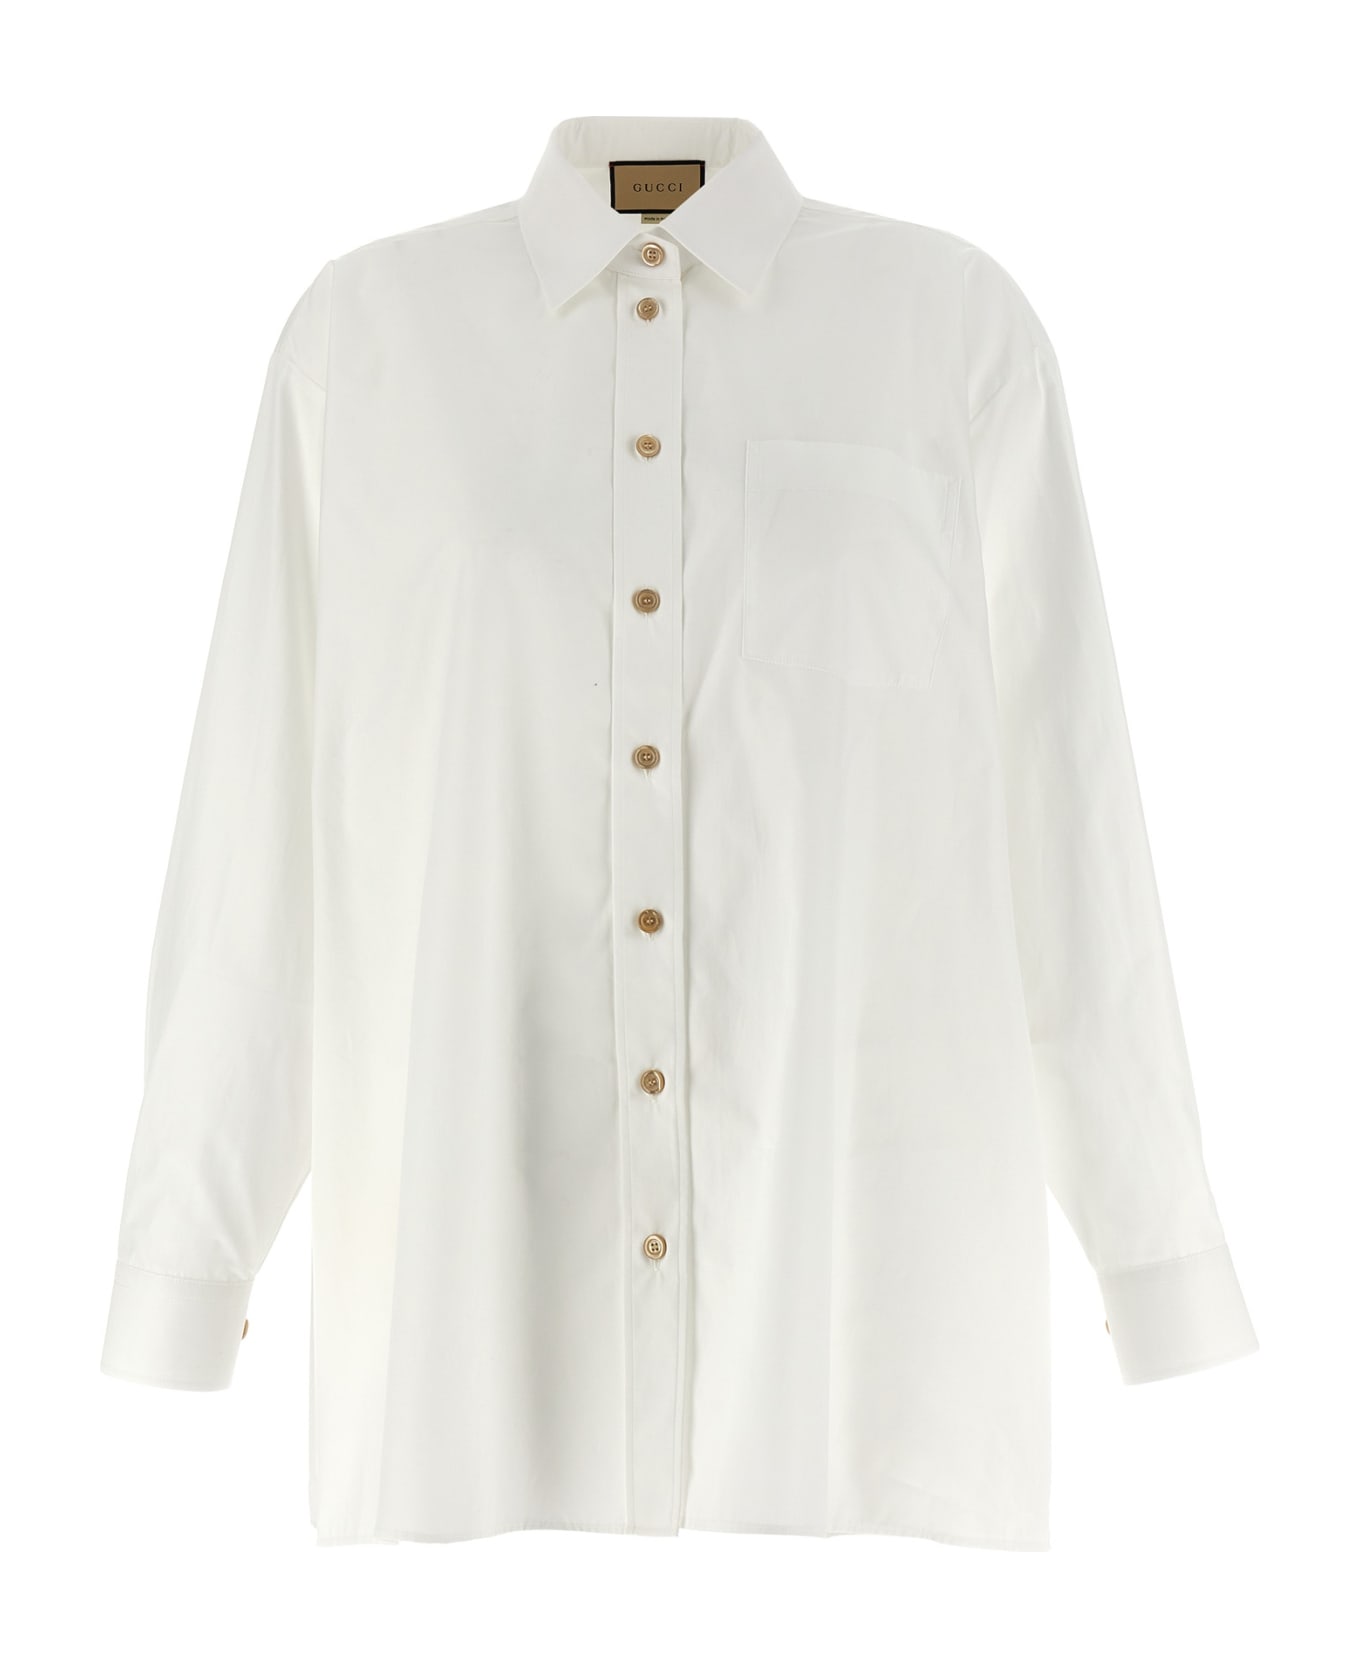 Gucci Logo Shirt - White